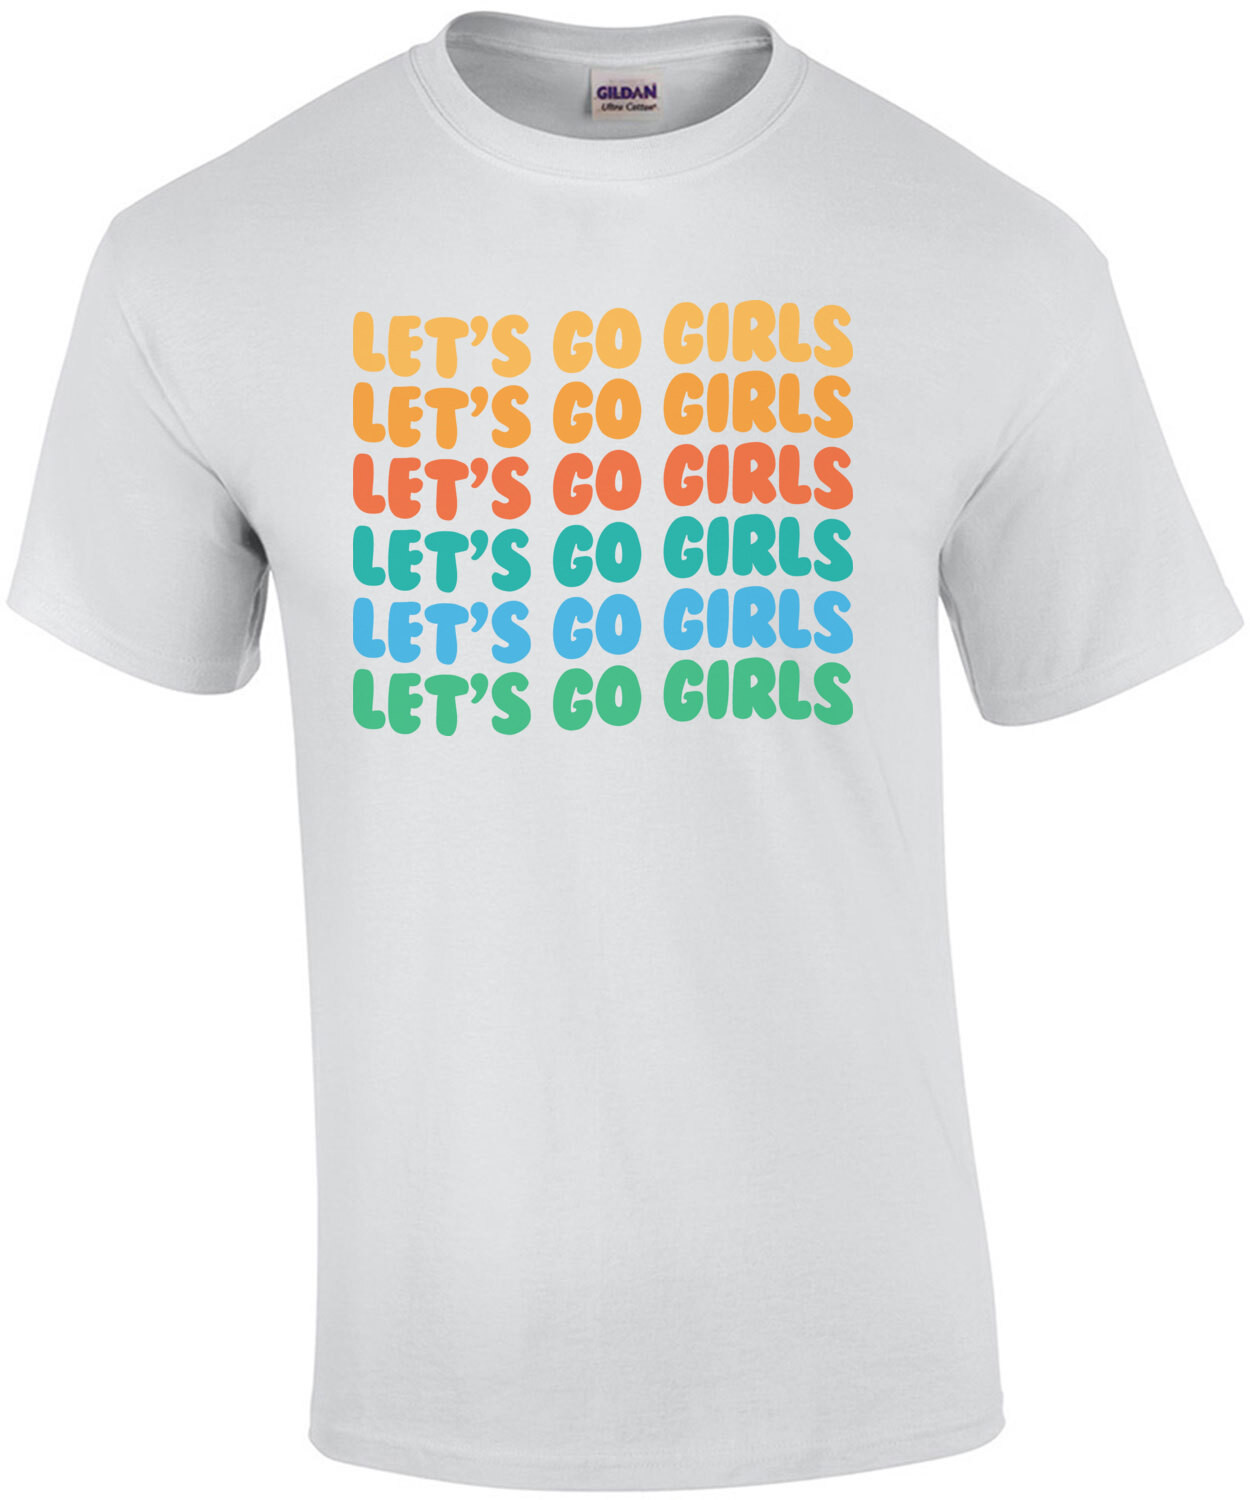 Let's Go Girls - Cute Ladies T-Shirt